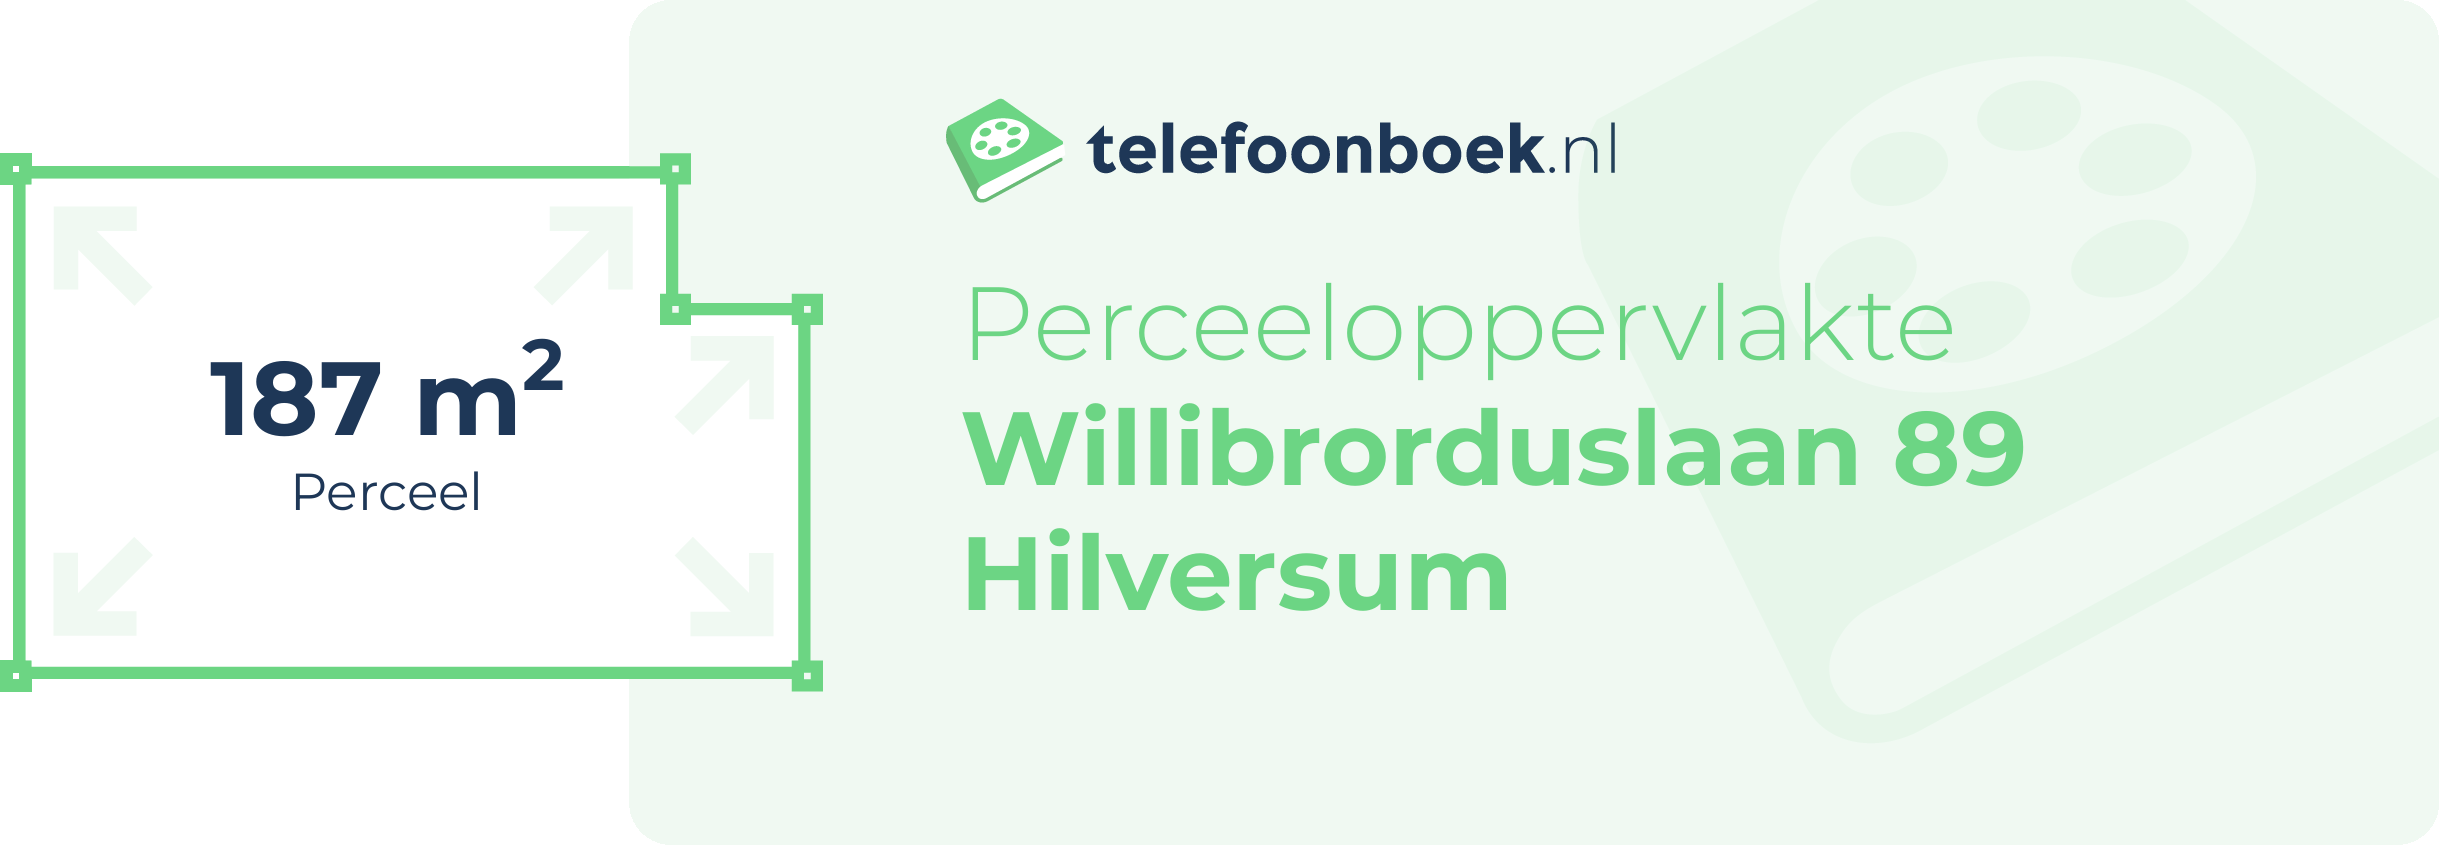 Perceeloppervlakte Willibrorduslaan 89 Hilversum